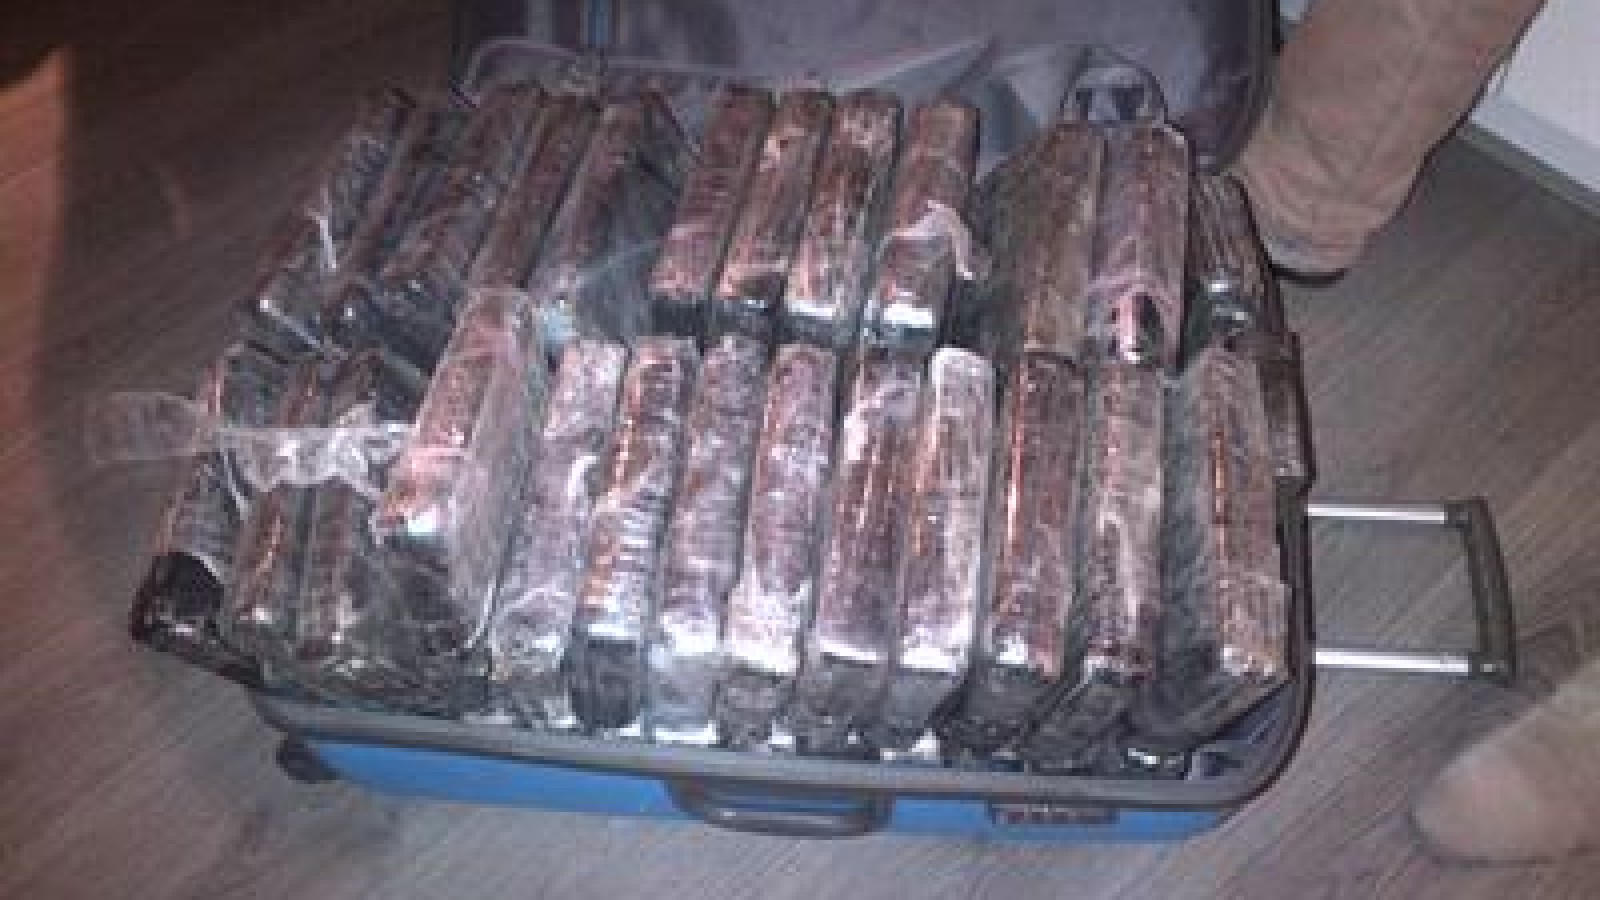 Honderd kilo coke en 2,5 miljoen euro gevonden